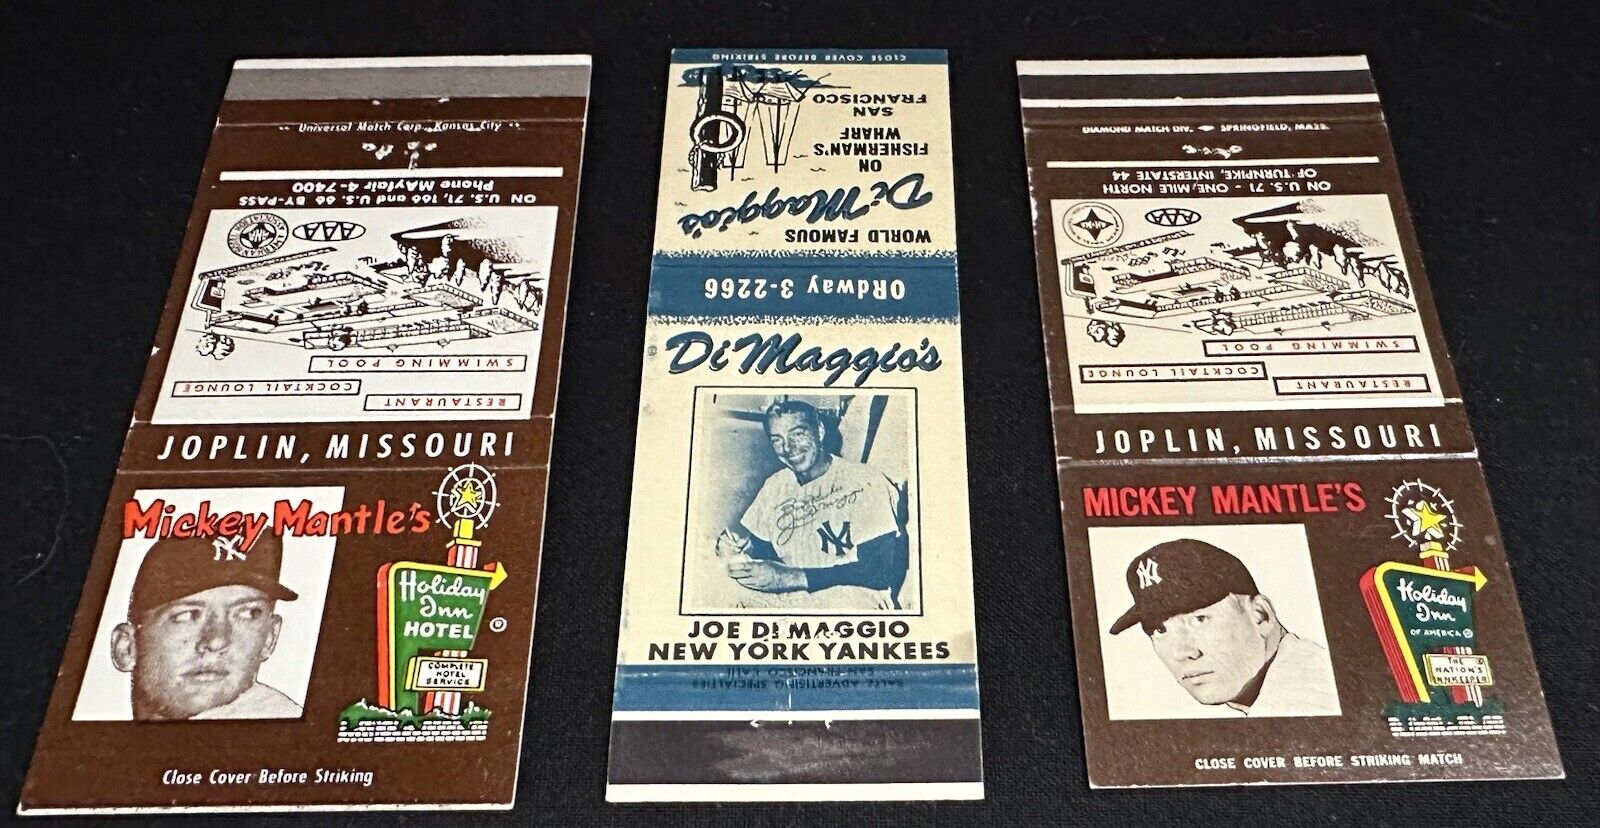 Baseball legends Mickey mantle\'s Holiday Inn & Joe Di Maggio\'s Match Covers x3